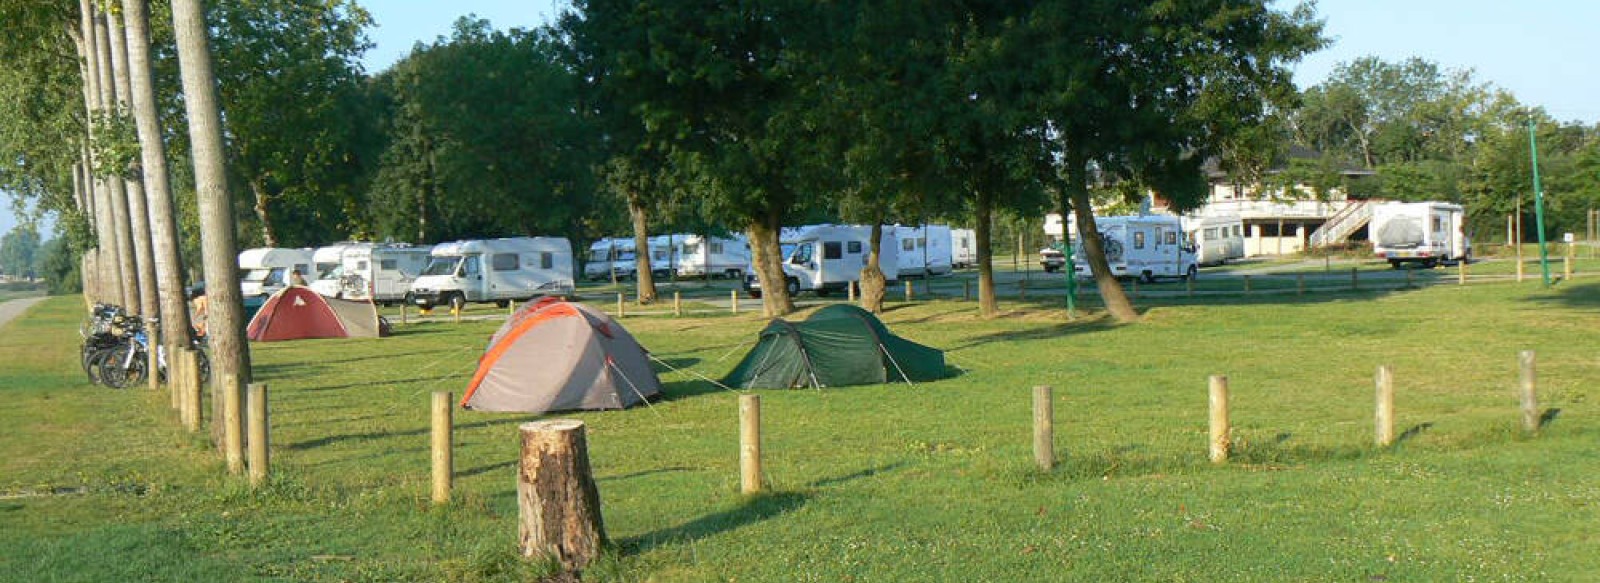 Camping de Bouchemaine